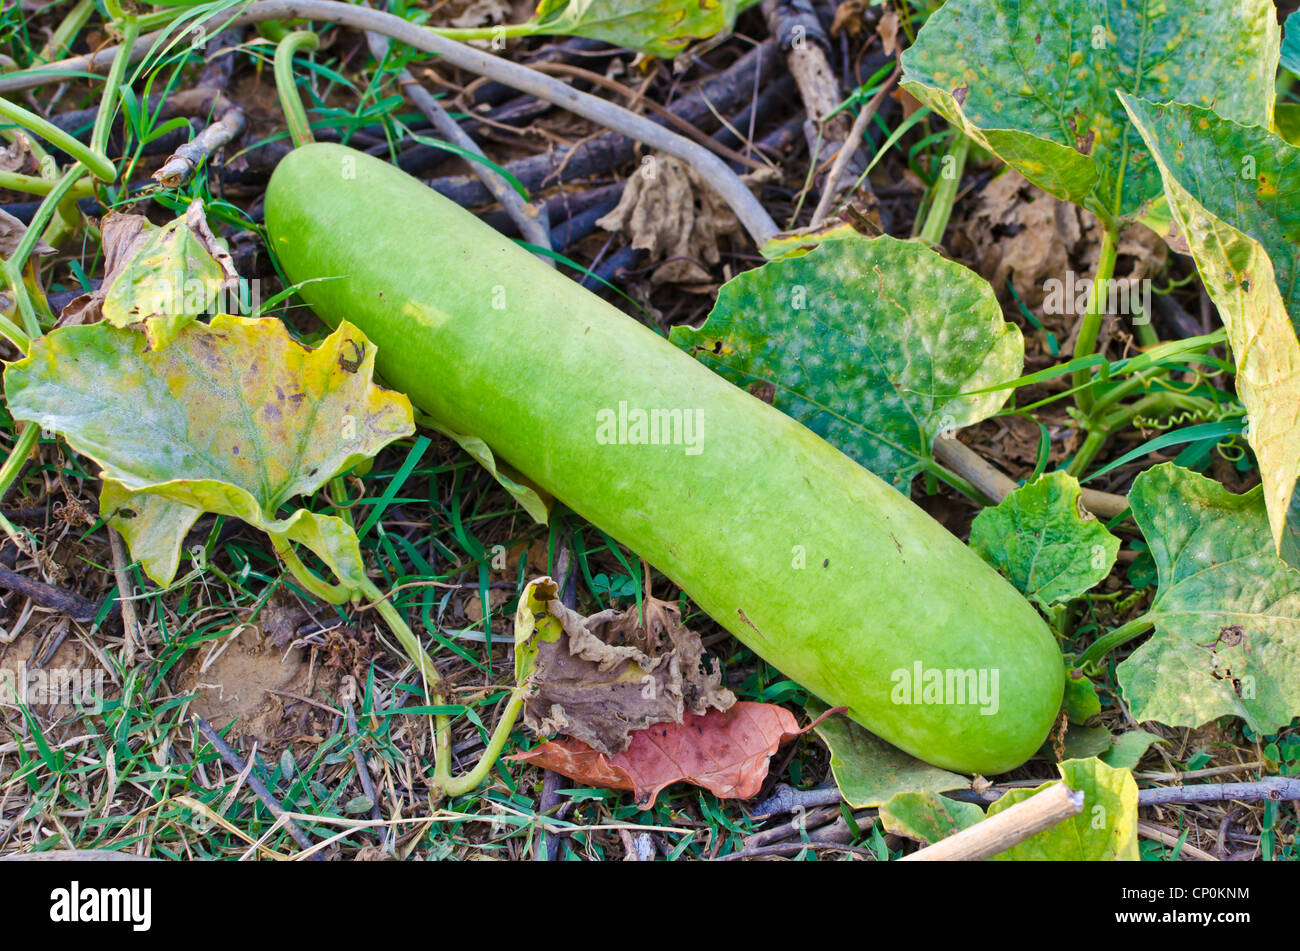 Bottle gourd / Lagenaria siceraria / Lagenaria vulgaris / opo squash / Long melon with its vine in the farm Stock Photo